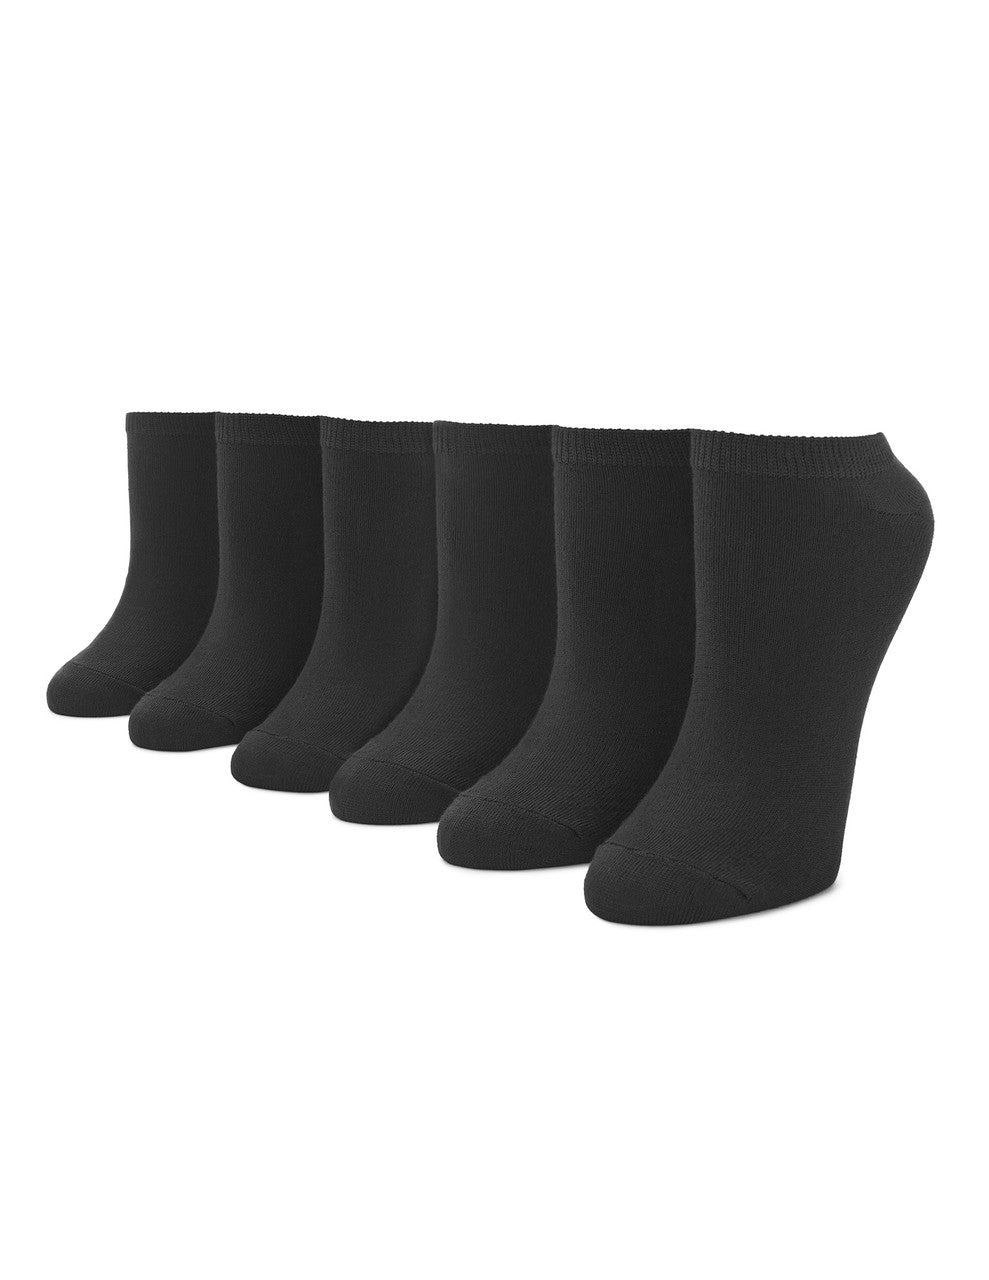 Supersoft Shoe Liner 6 Pair Pack Socks